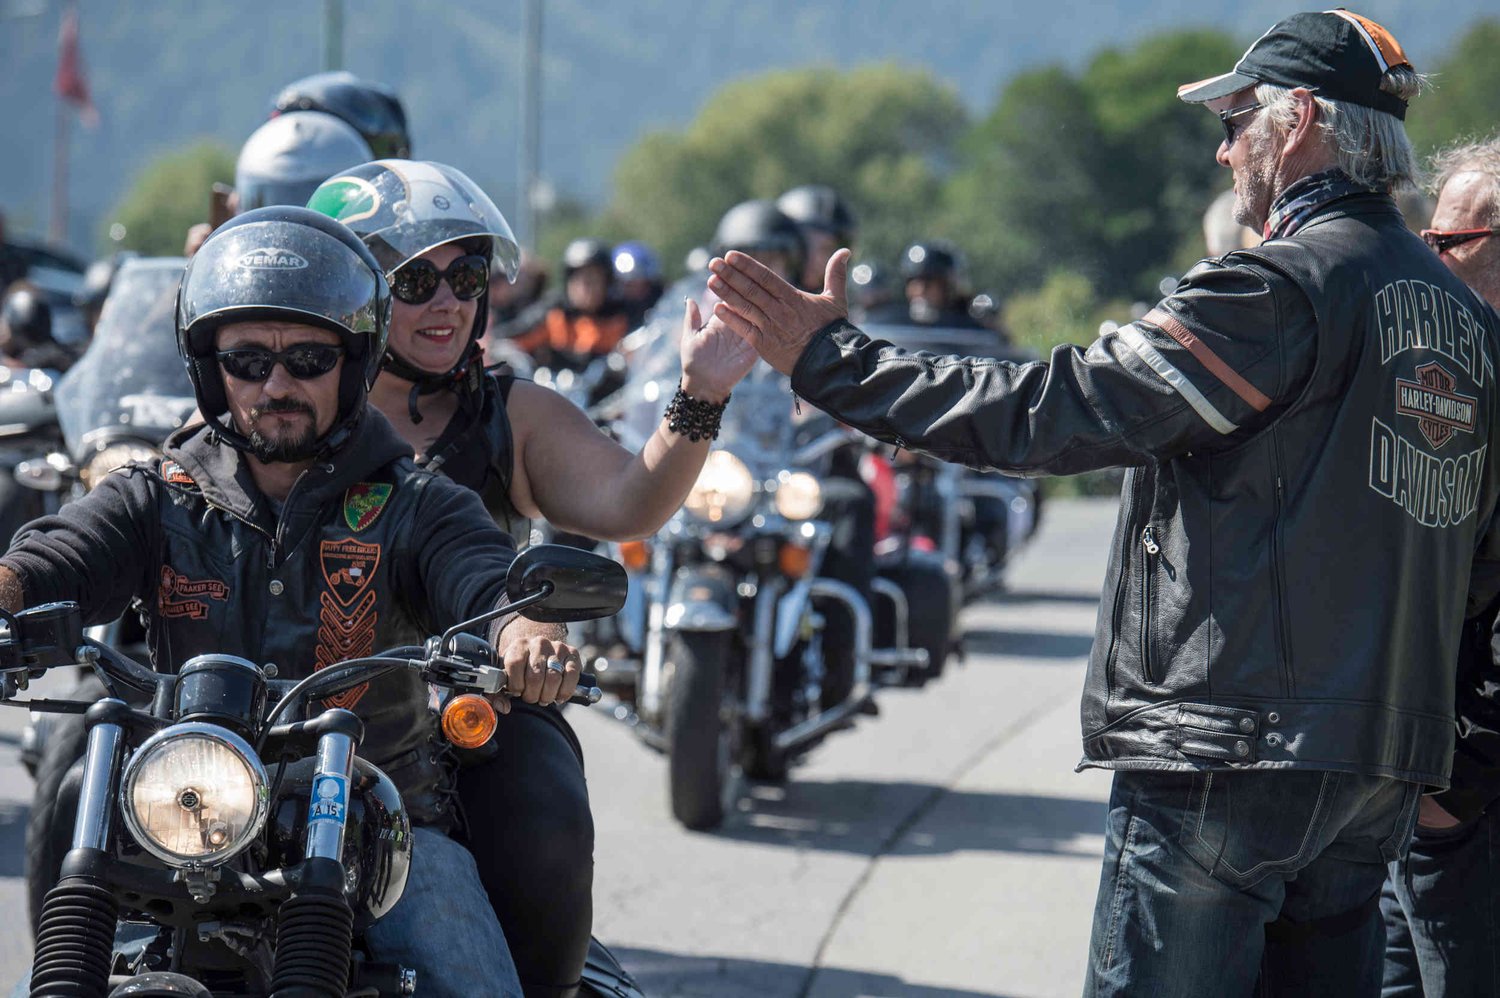 Couple on Harley-Davidson motorcycle hi-fiving spectator